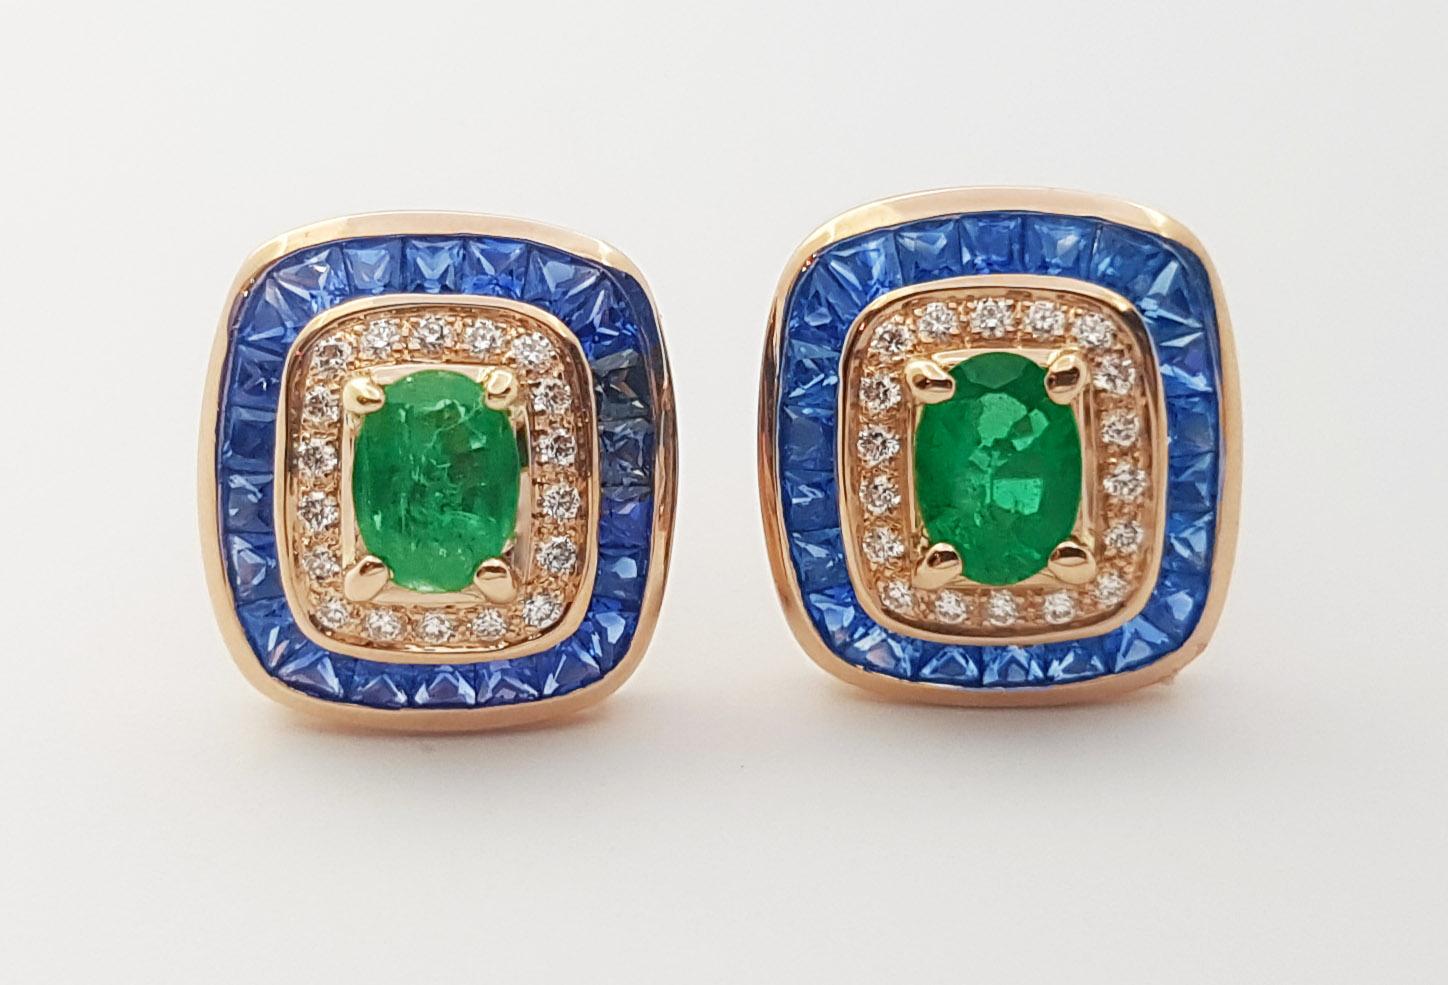 Emerald 1.29 carats, Blue Sapphire 4.11 carats and Diamond 0.38 carat Earrings set in 18 Karat Rose Gold Settings

Width: 1.4 cm 
Length: 1.6 cm
Total Weight: 10.64 grams

